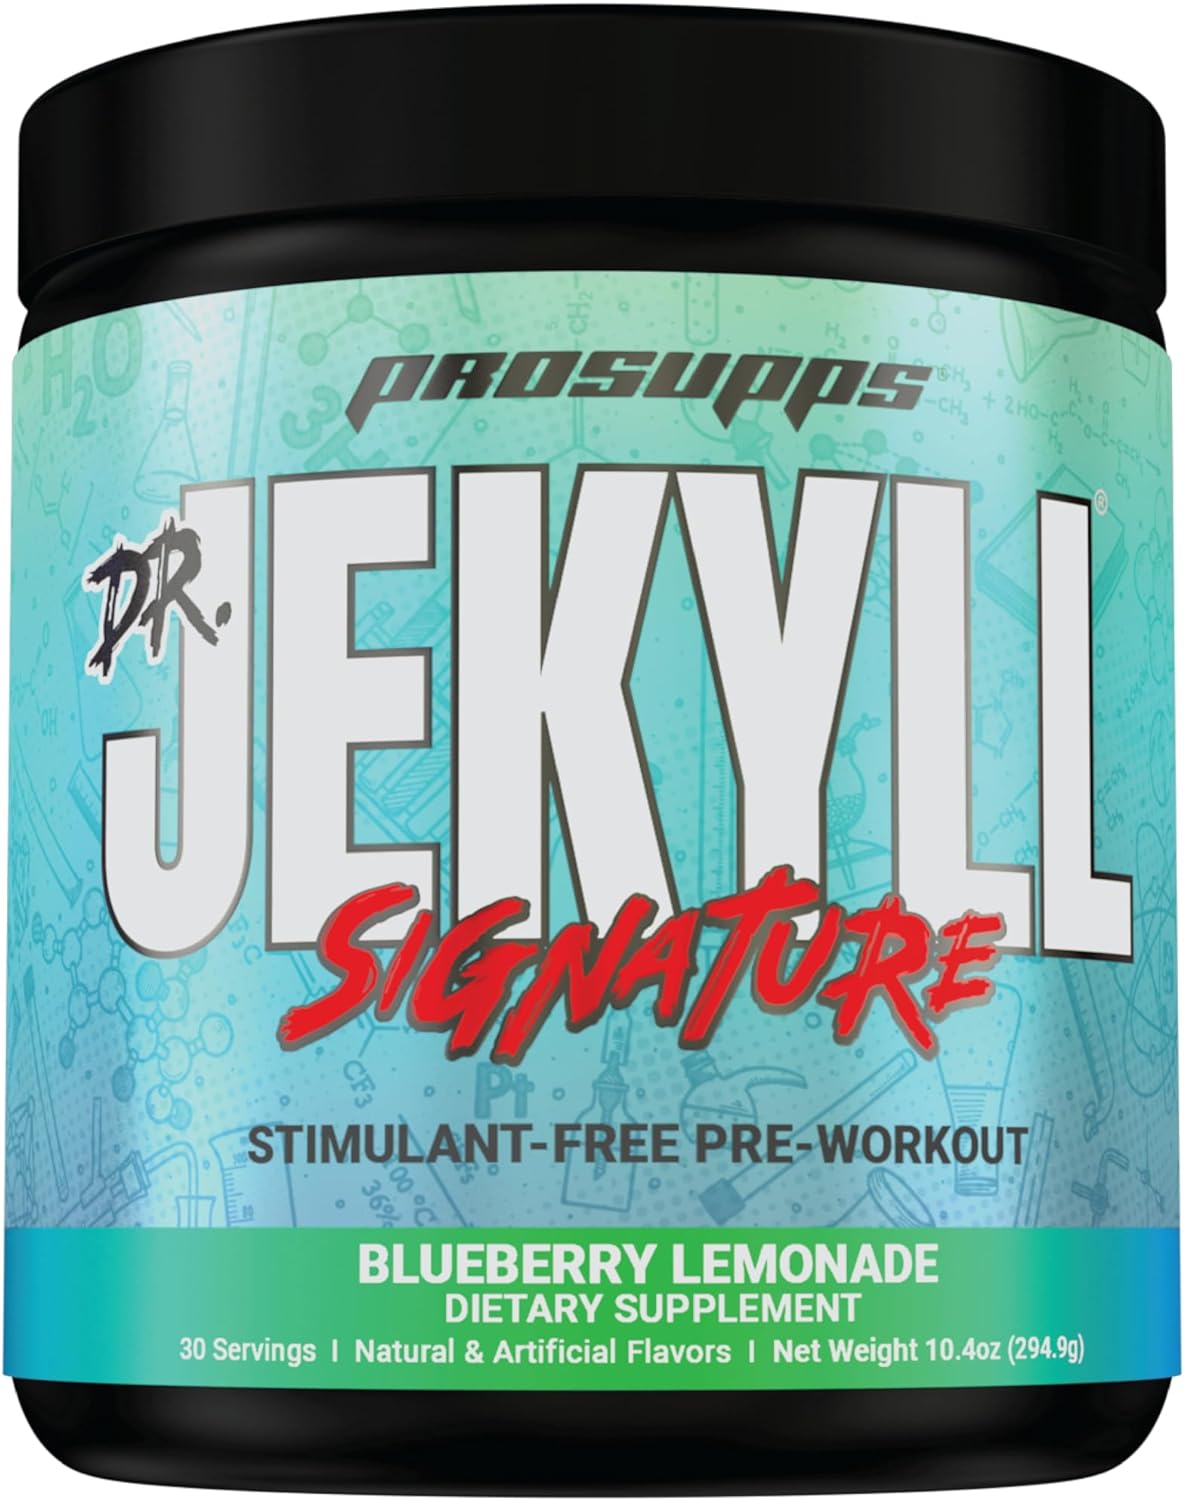 PROSUPPS Dr. Jekyll Signature Pre-Workout Powder, Stimulant & Caffeine